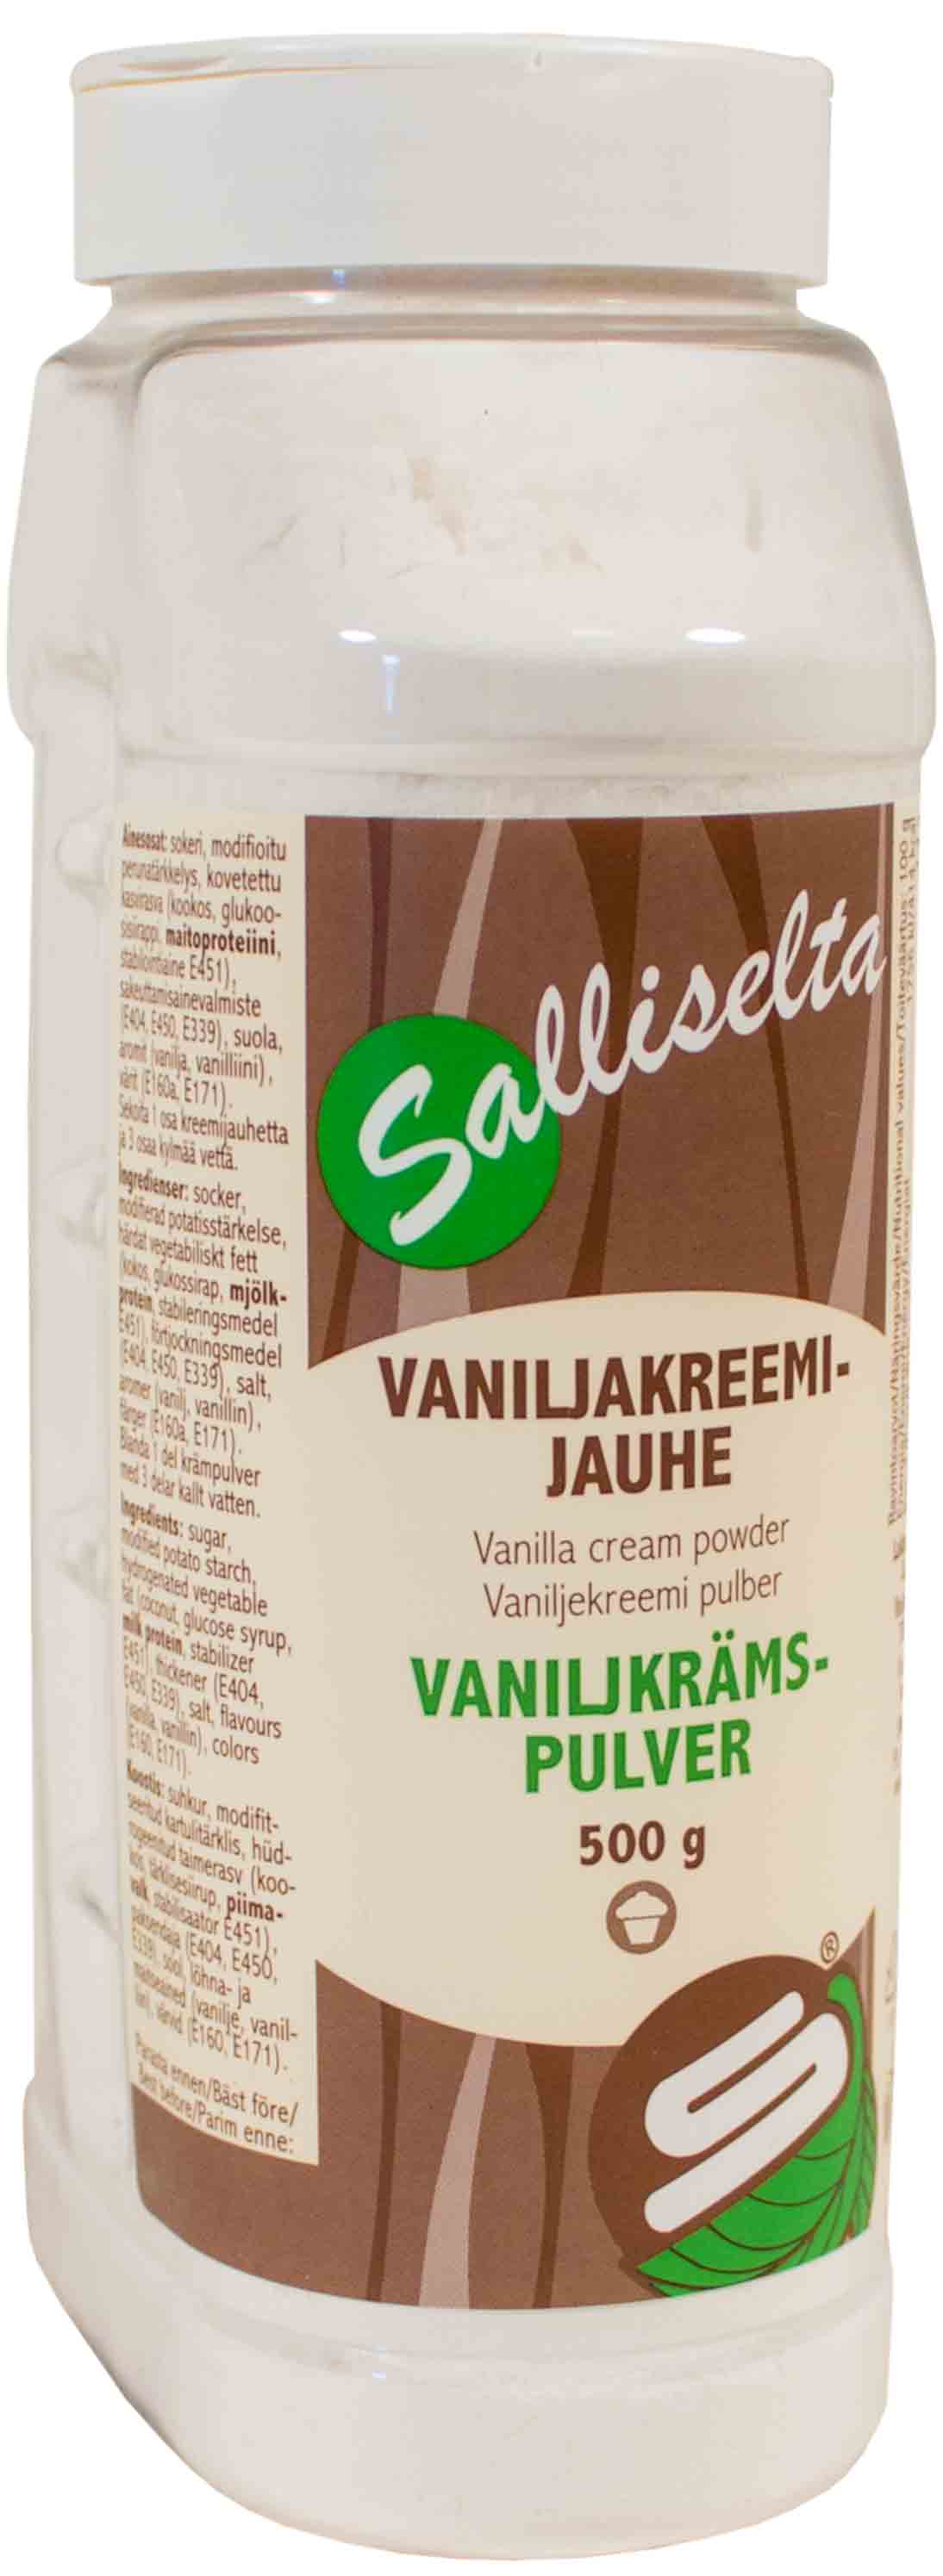 Vanilla cream powder 500g